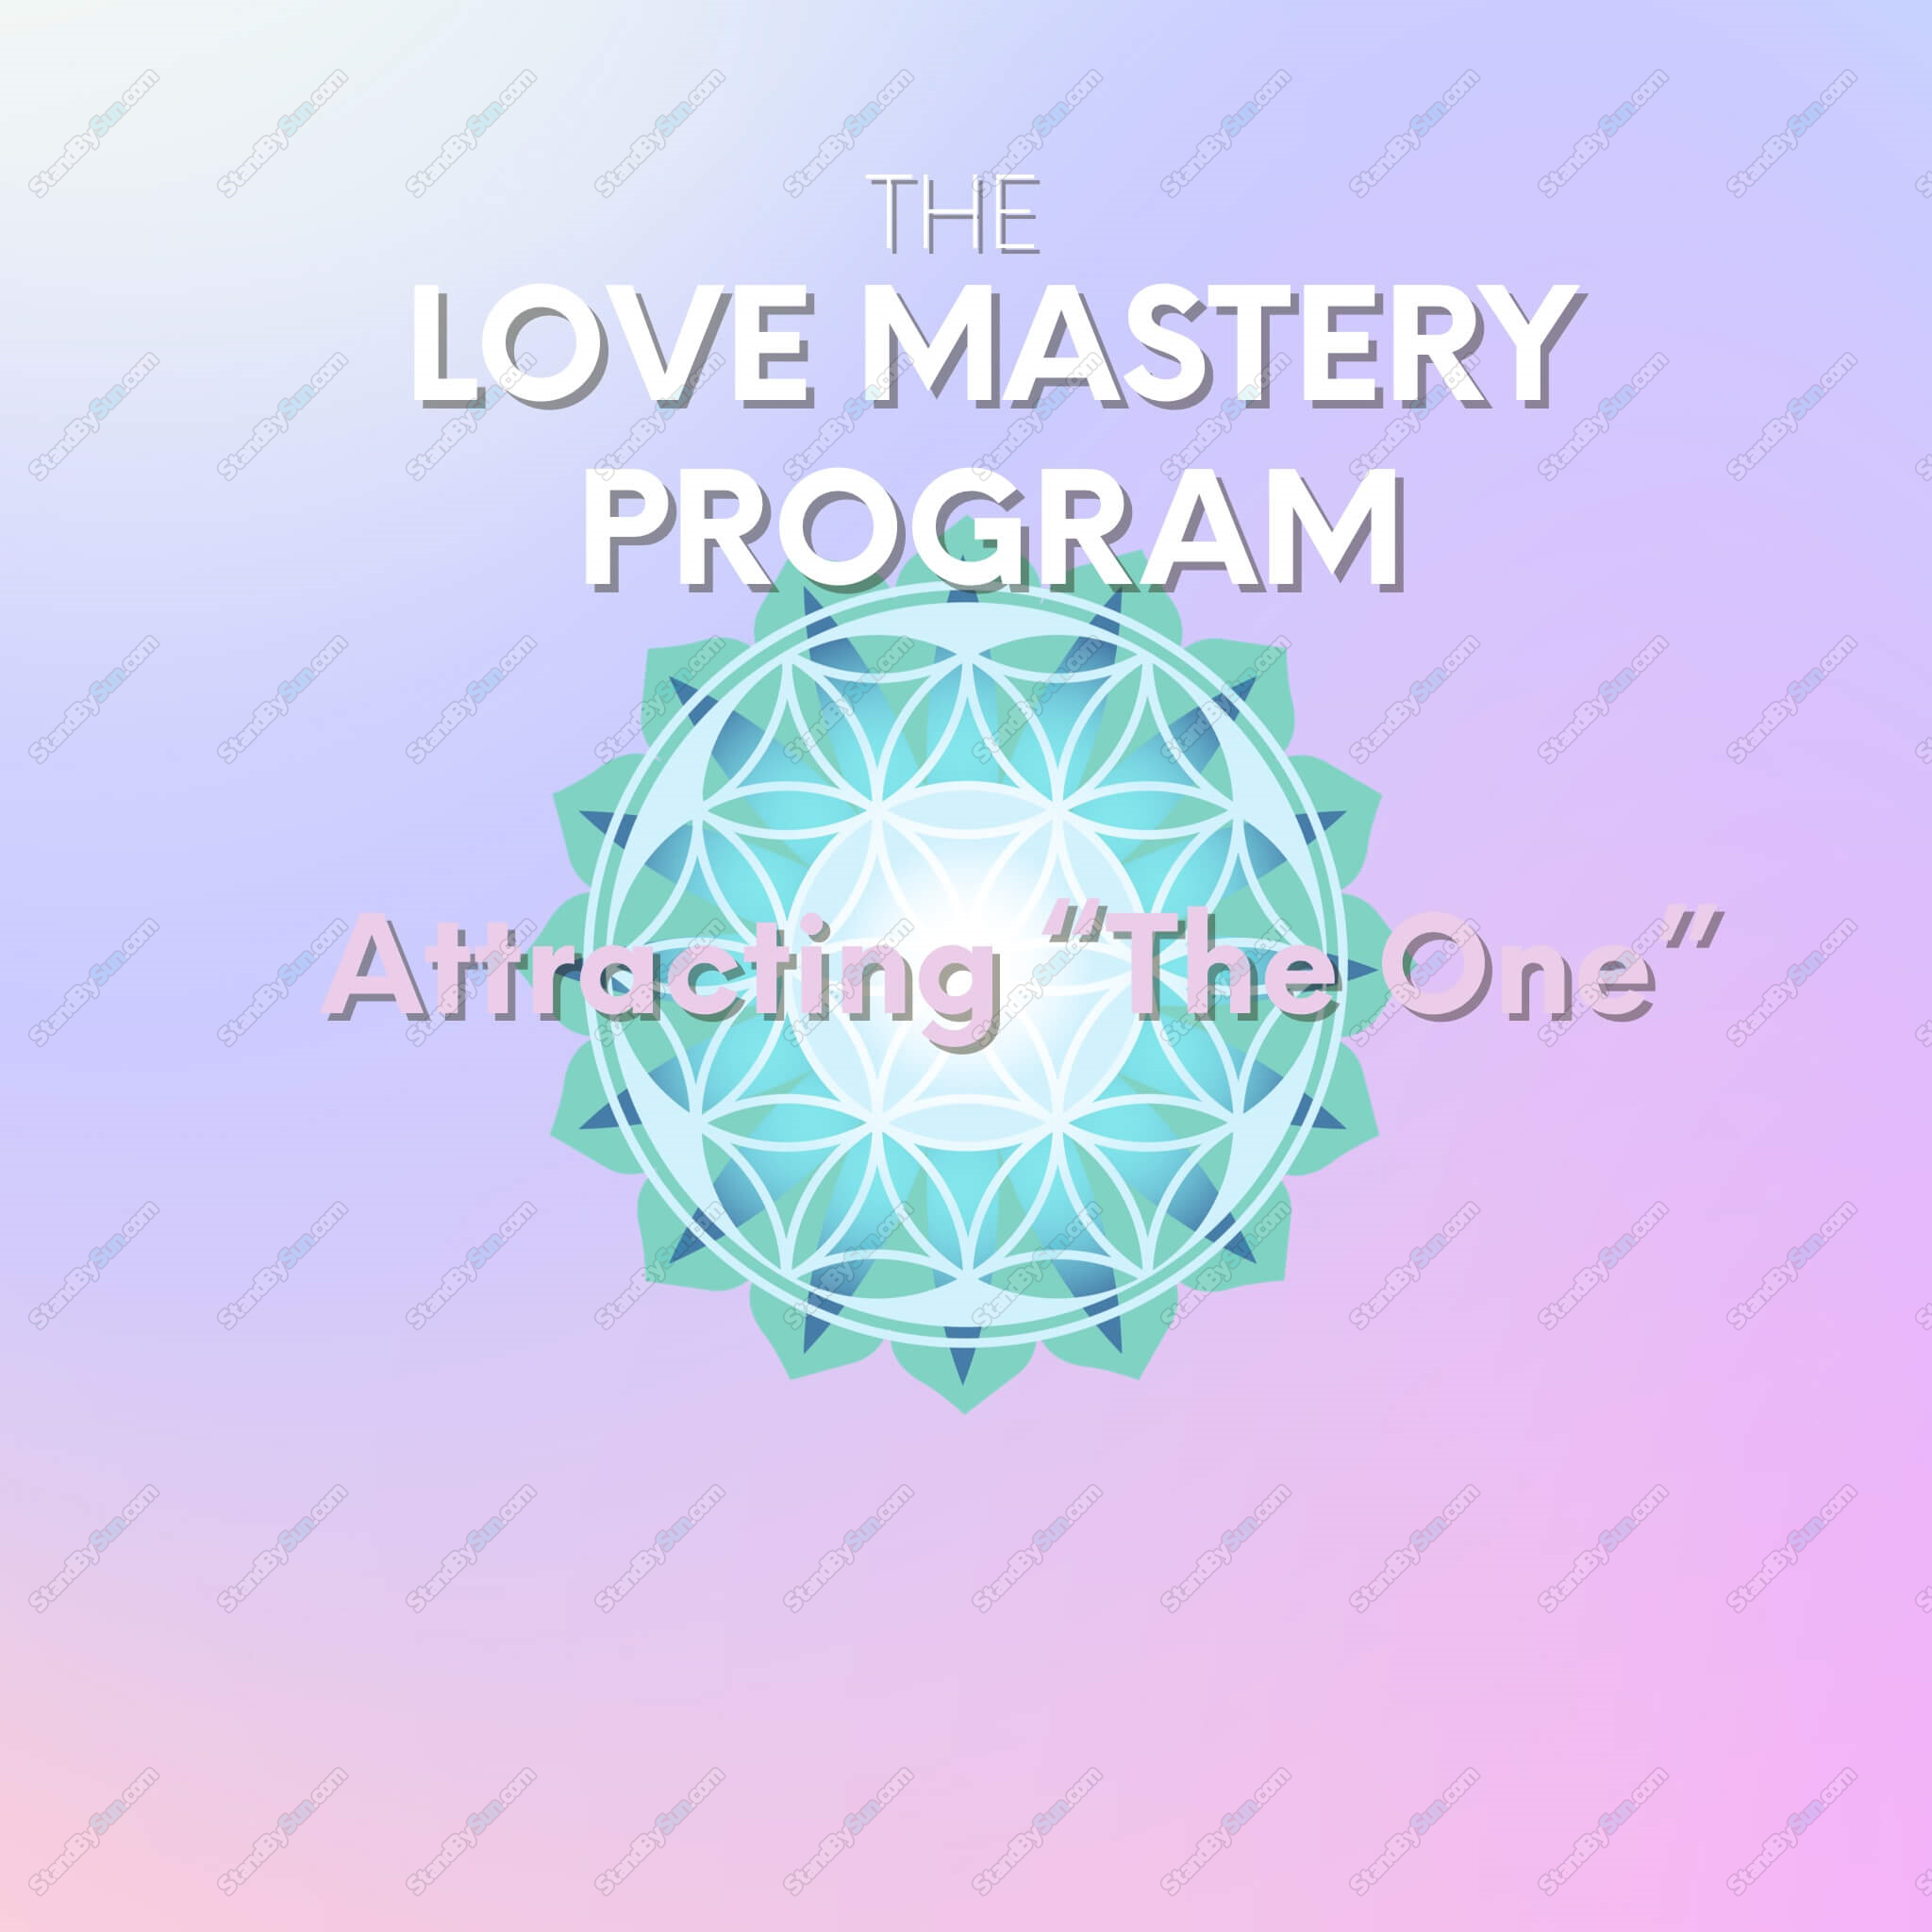 Leeor Alexandra - The Love Mastery Program Attracting The One